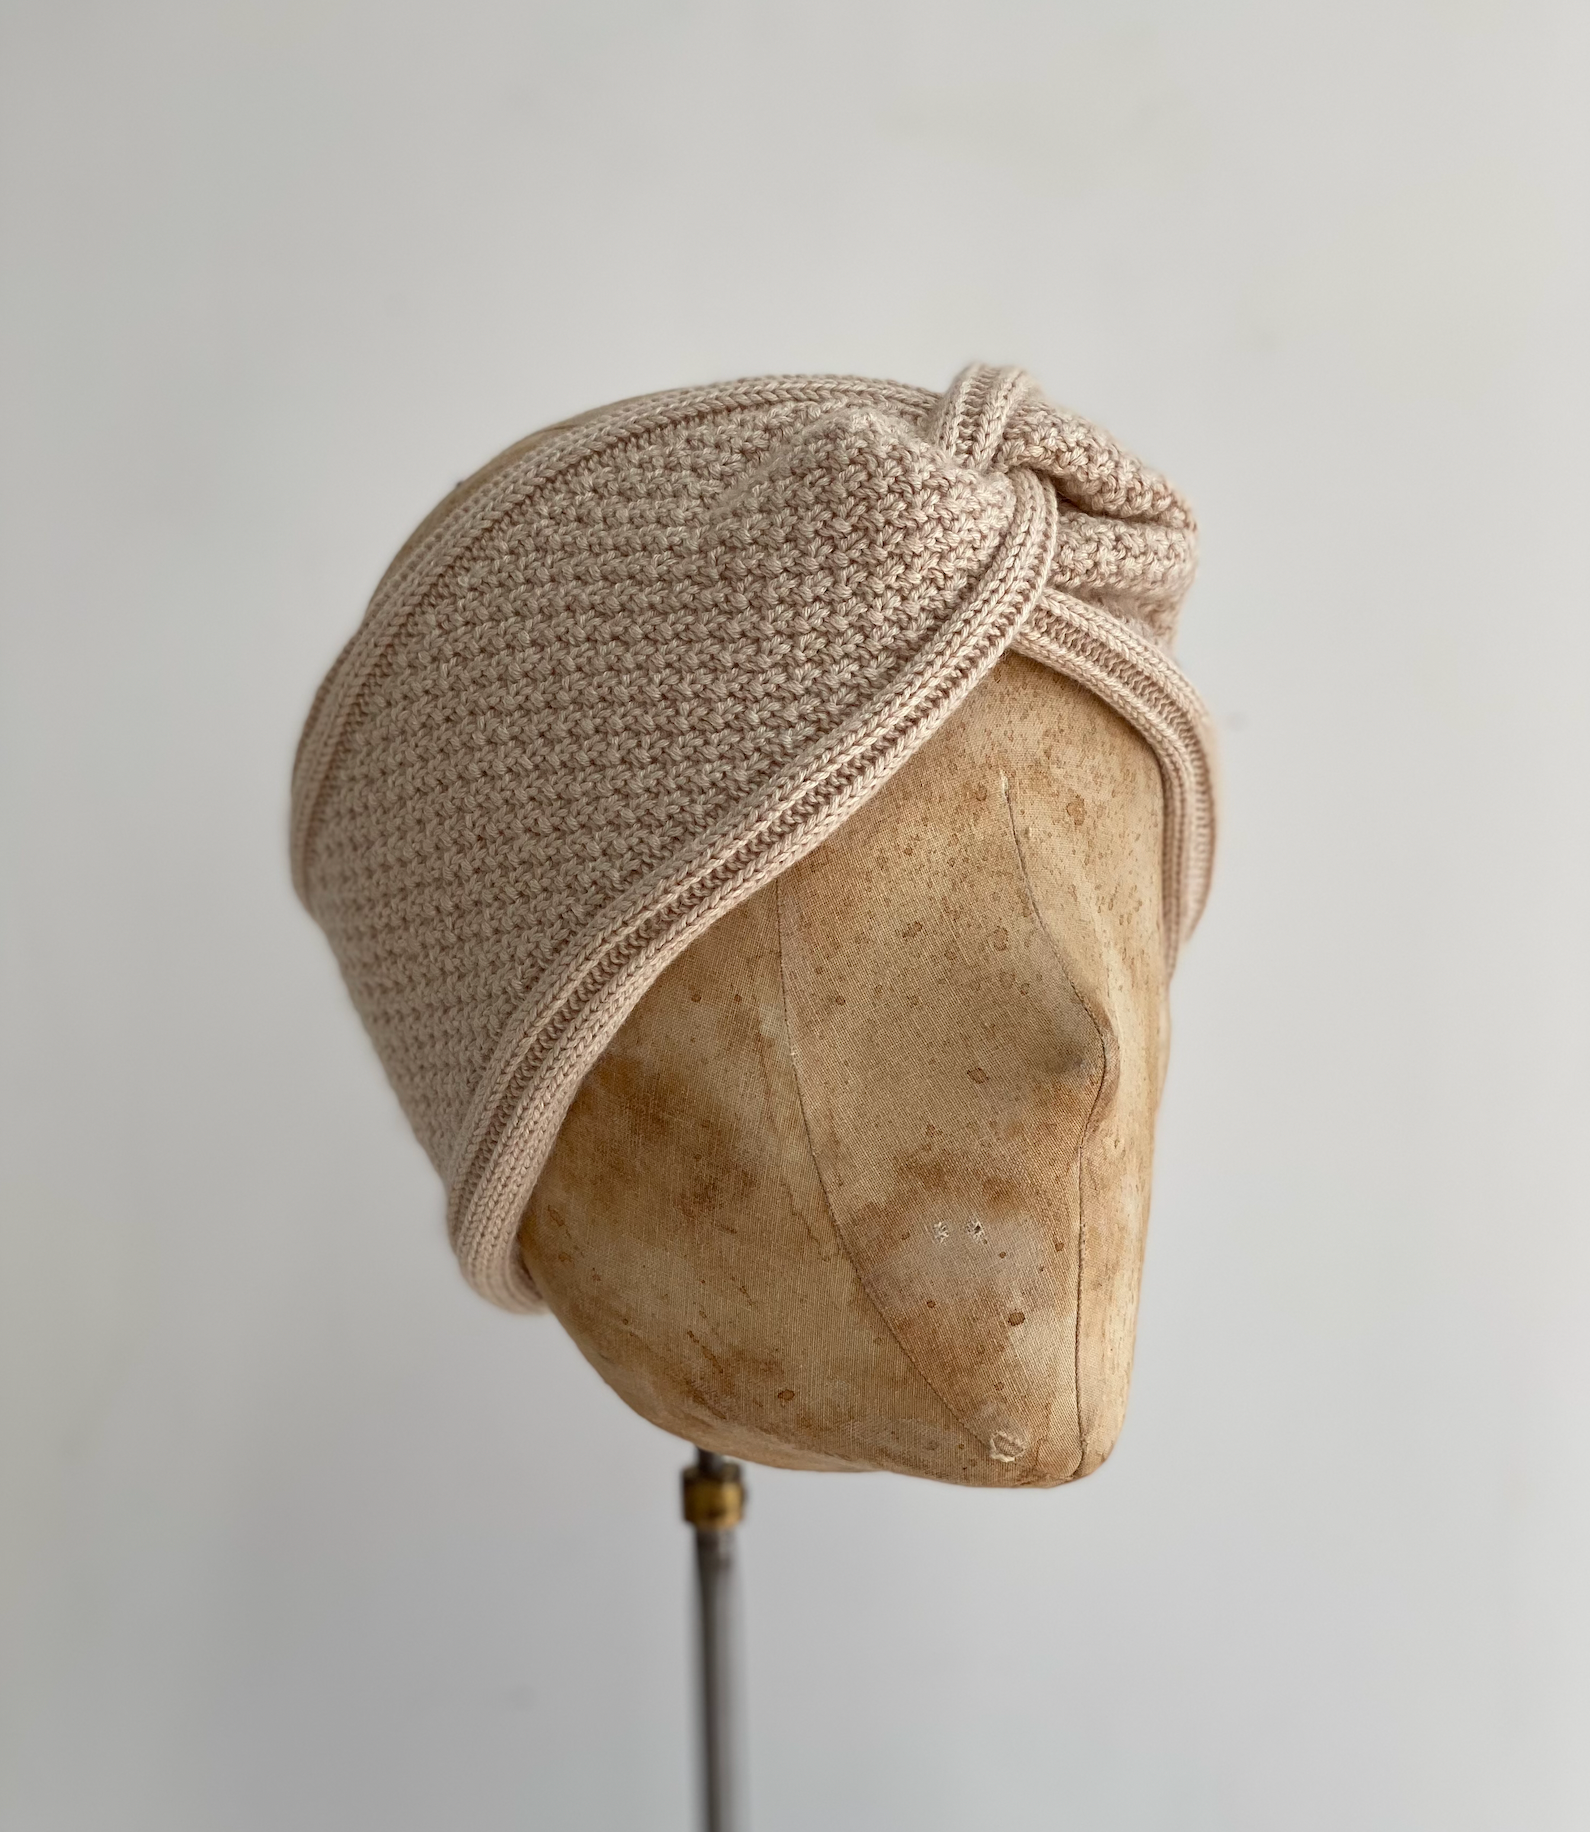 Knitted Cream Headband in Cashmere Mix Yarn